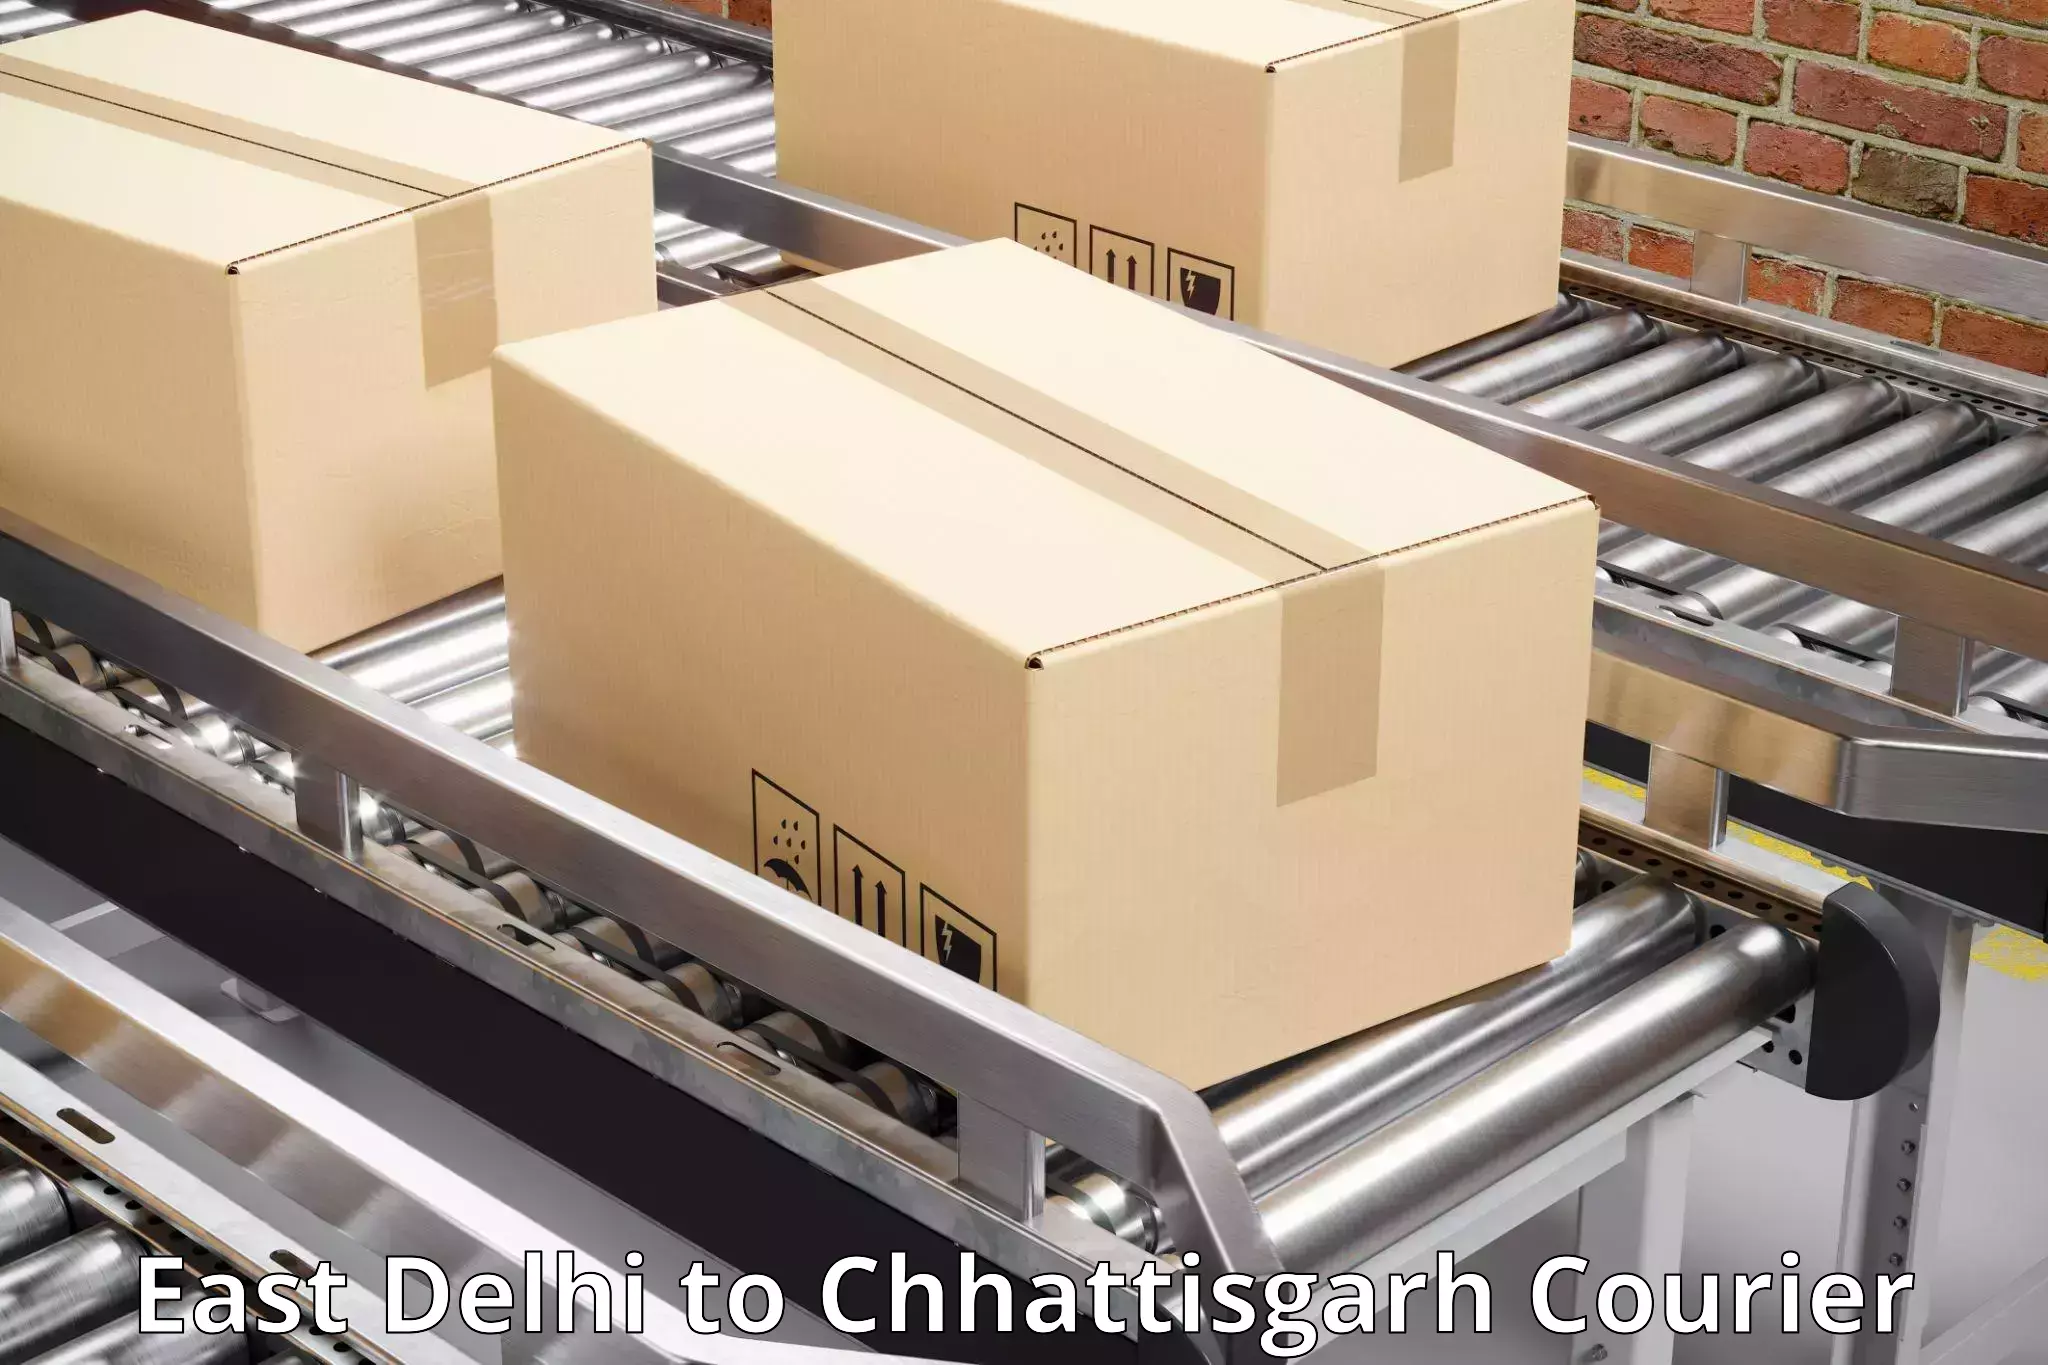 Express delivery capabilities East Delhi to Patna Chhattisgarh